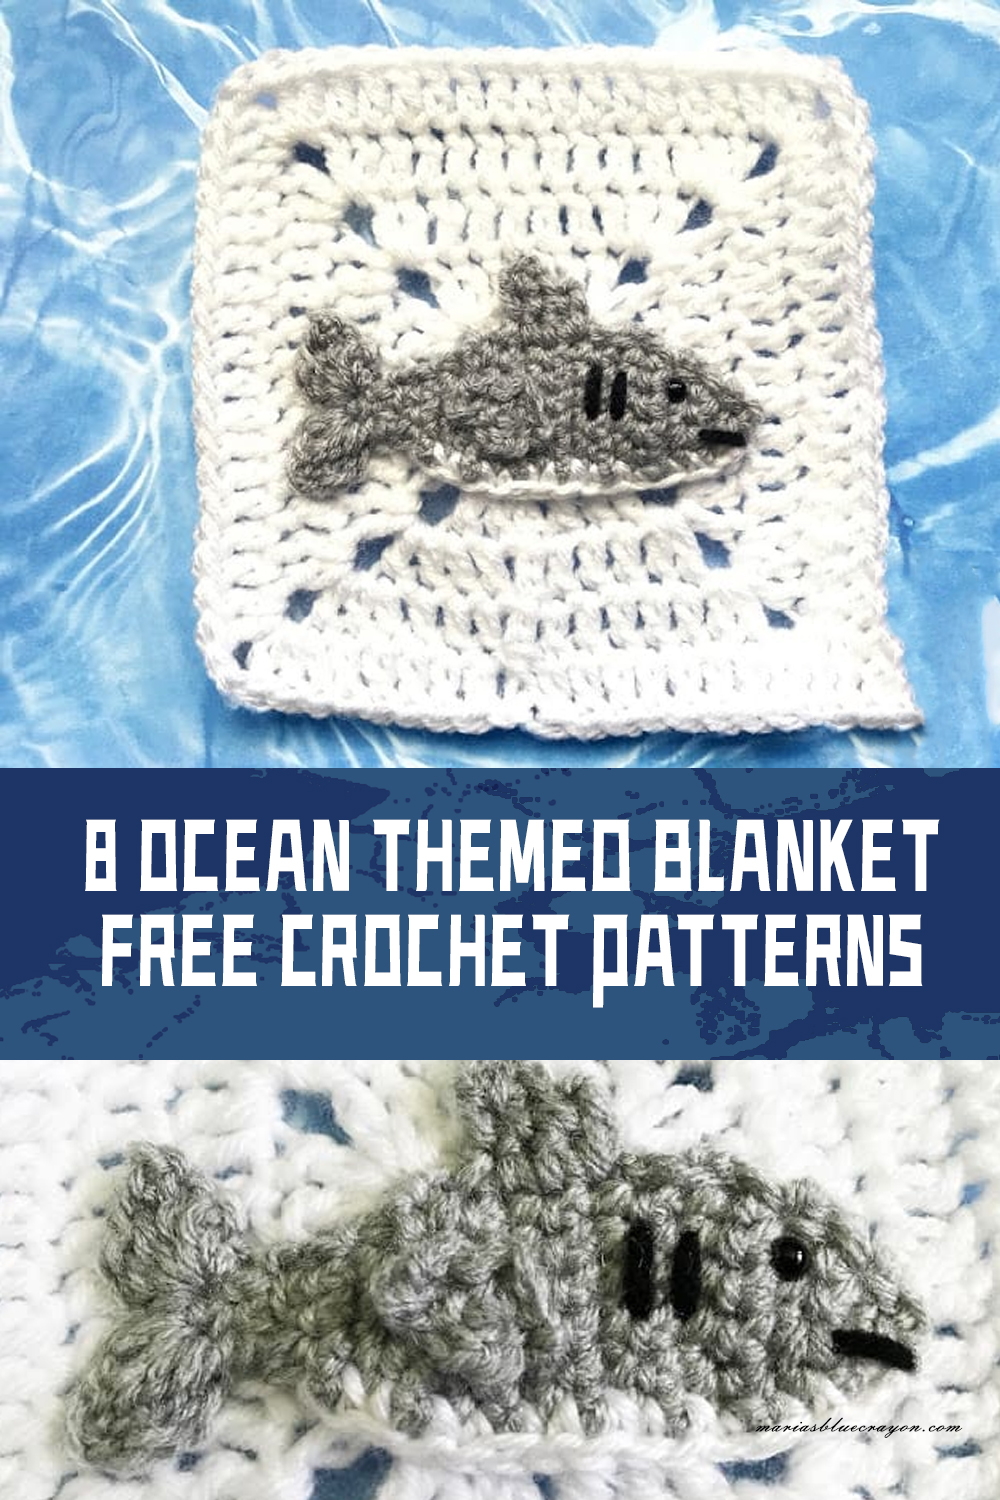 8 Ocean Themed Blanket Free Crochet Patterns